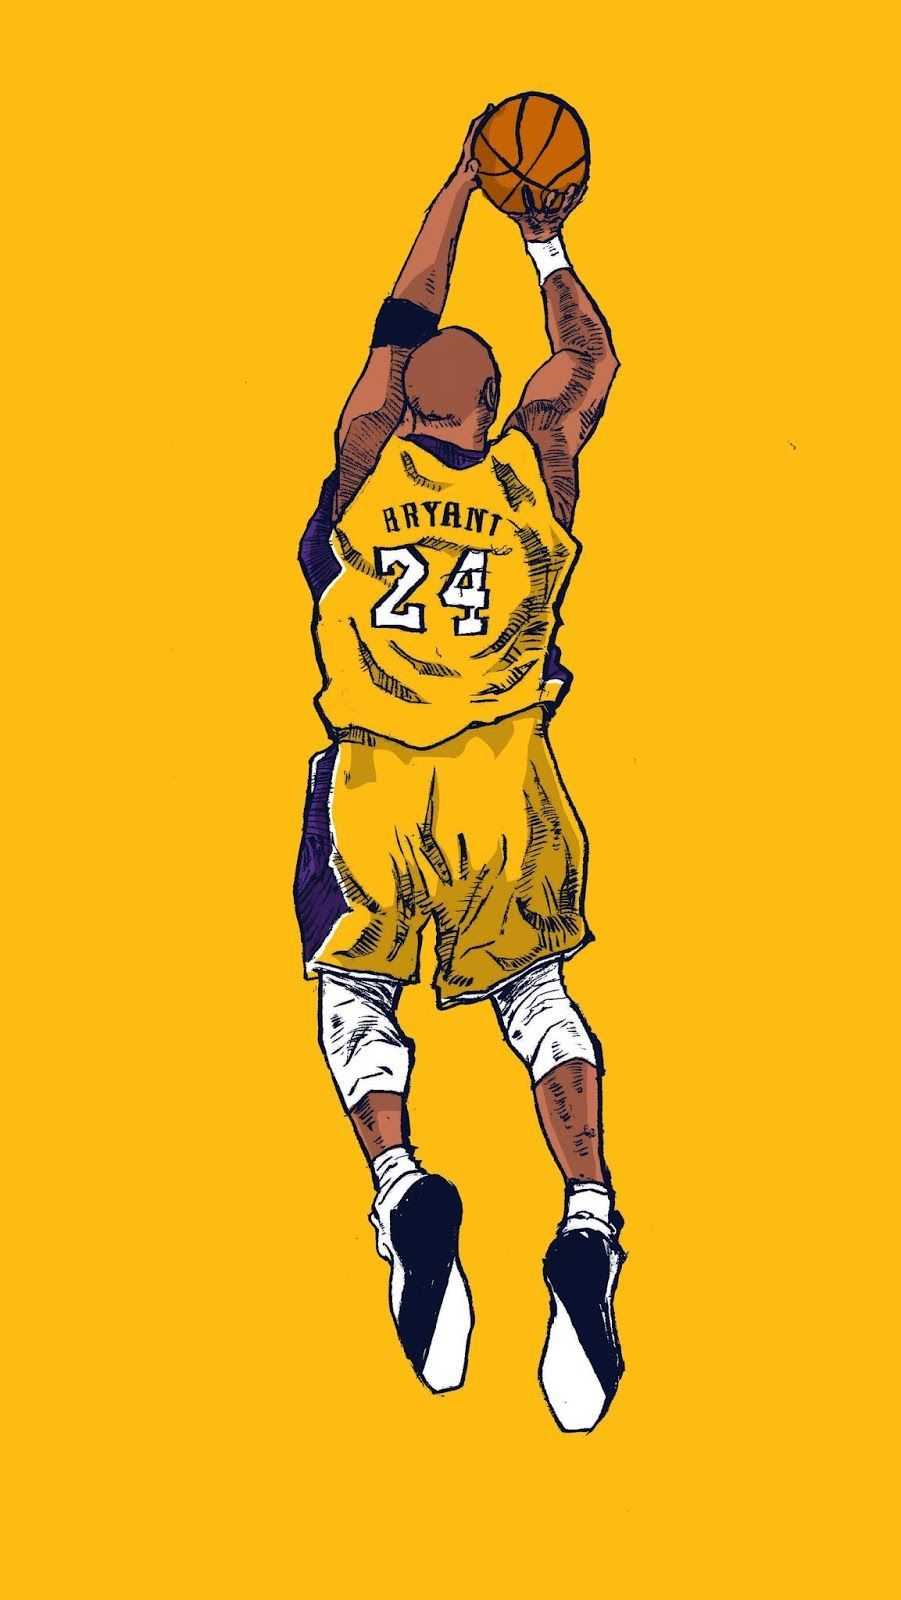 Kobe Bryant iPhone Wallpaper by sportsgraffixHD on DeviantArt